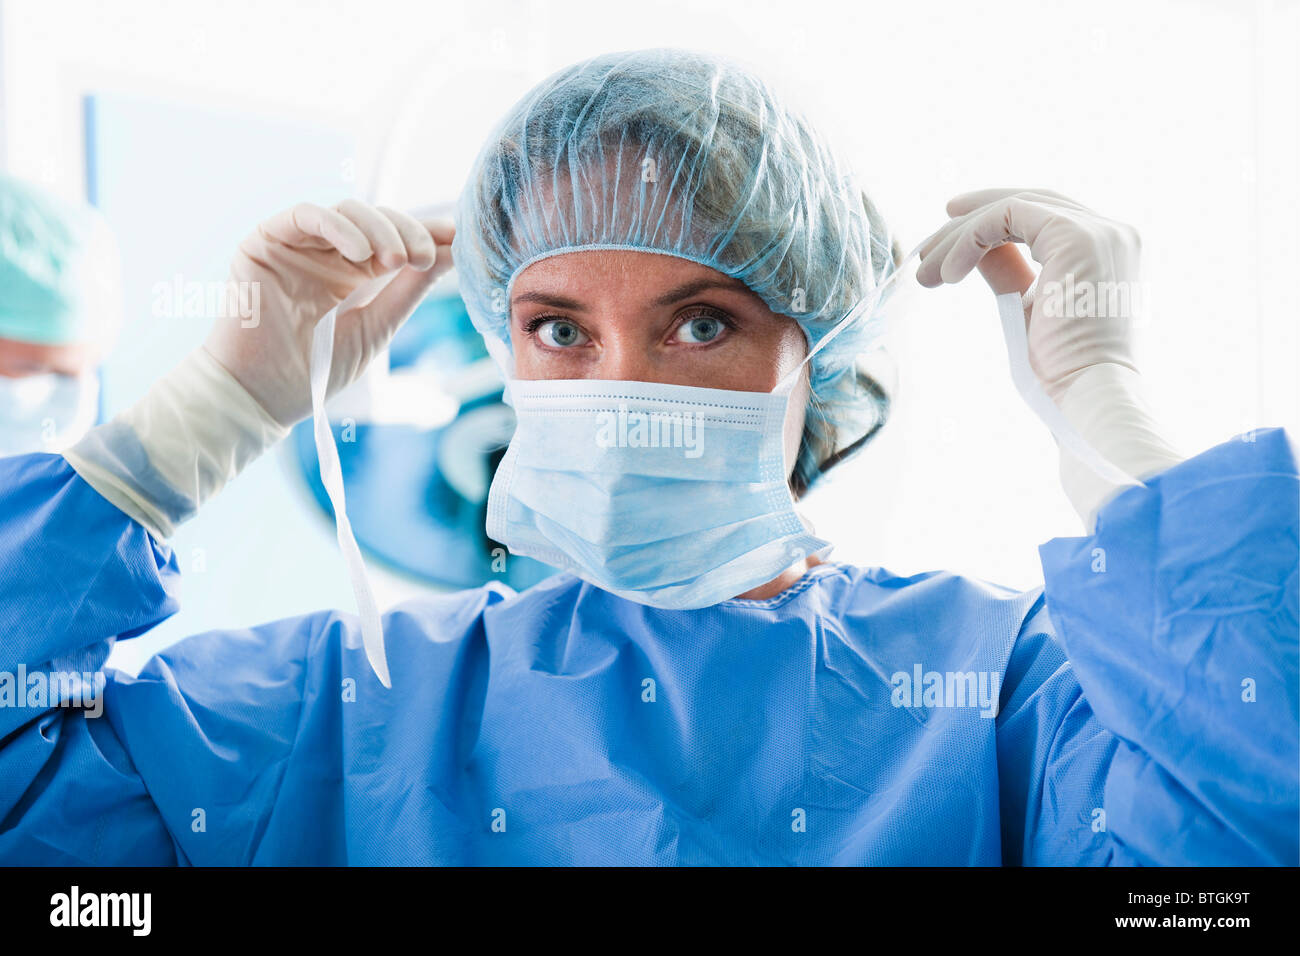 Chirurgen tragen Mundschutz im OP-Saal Stockfotografie - Alamy